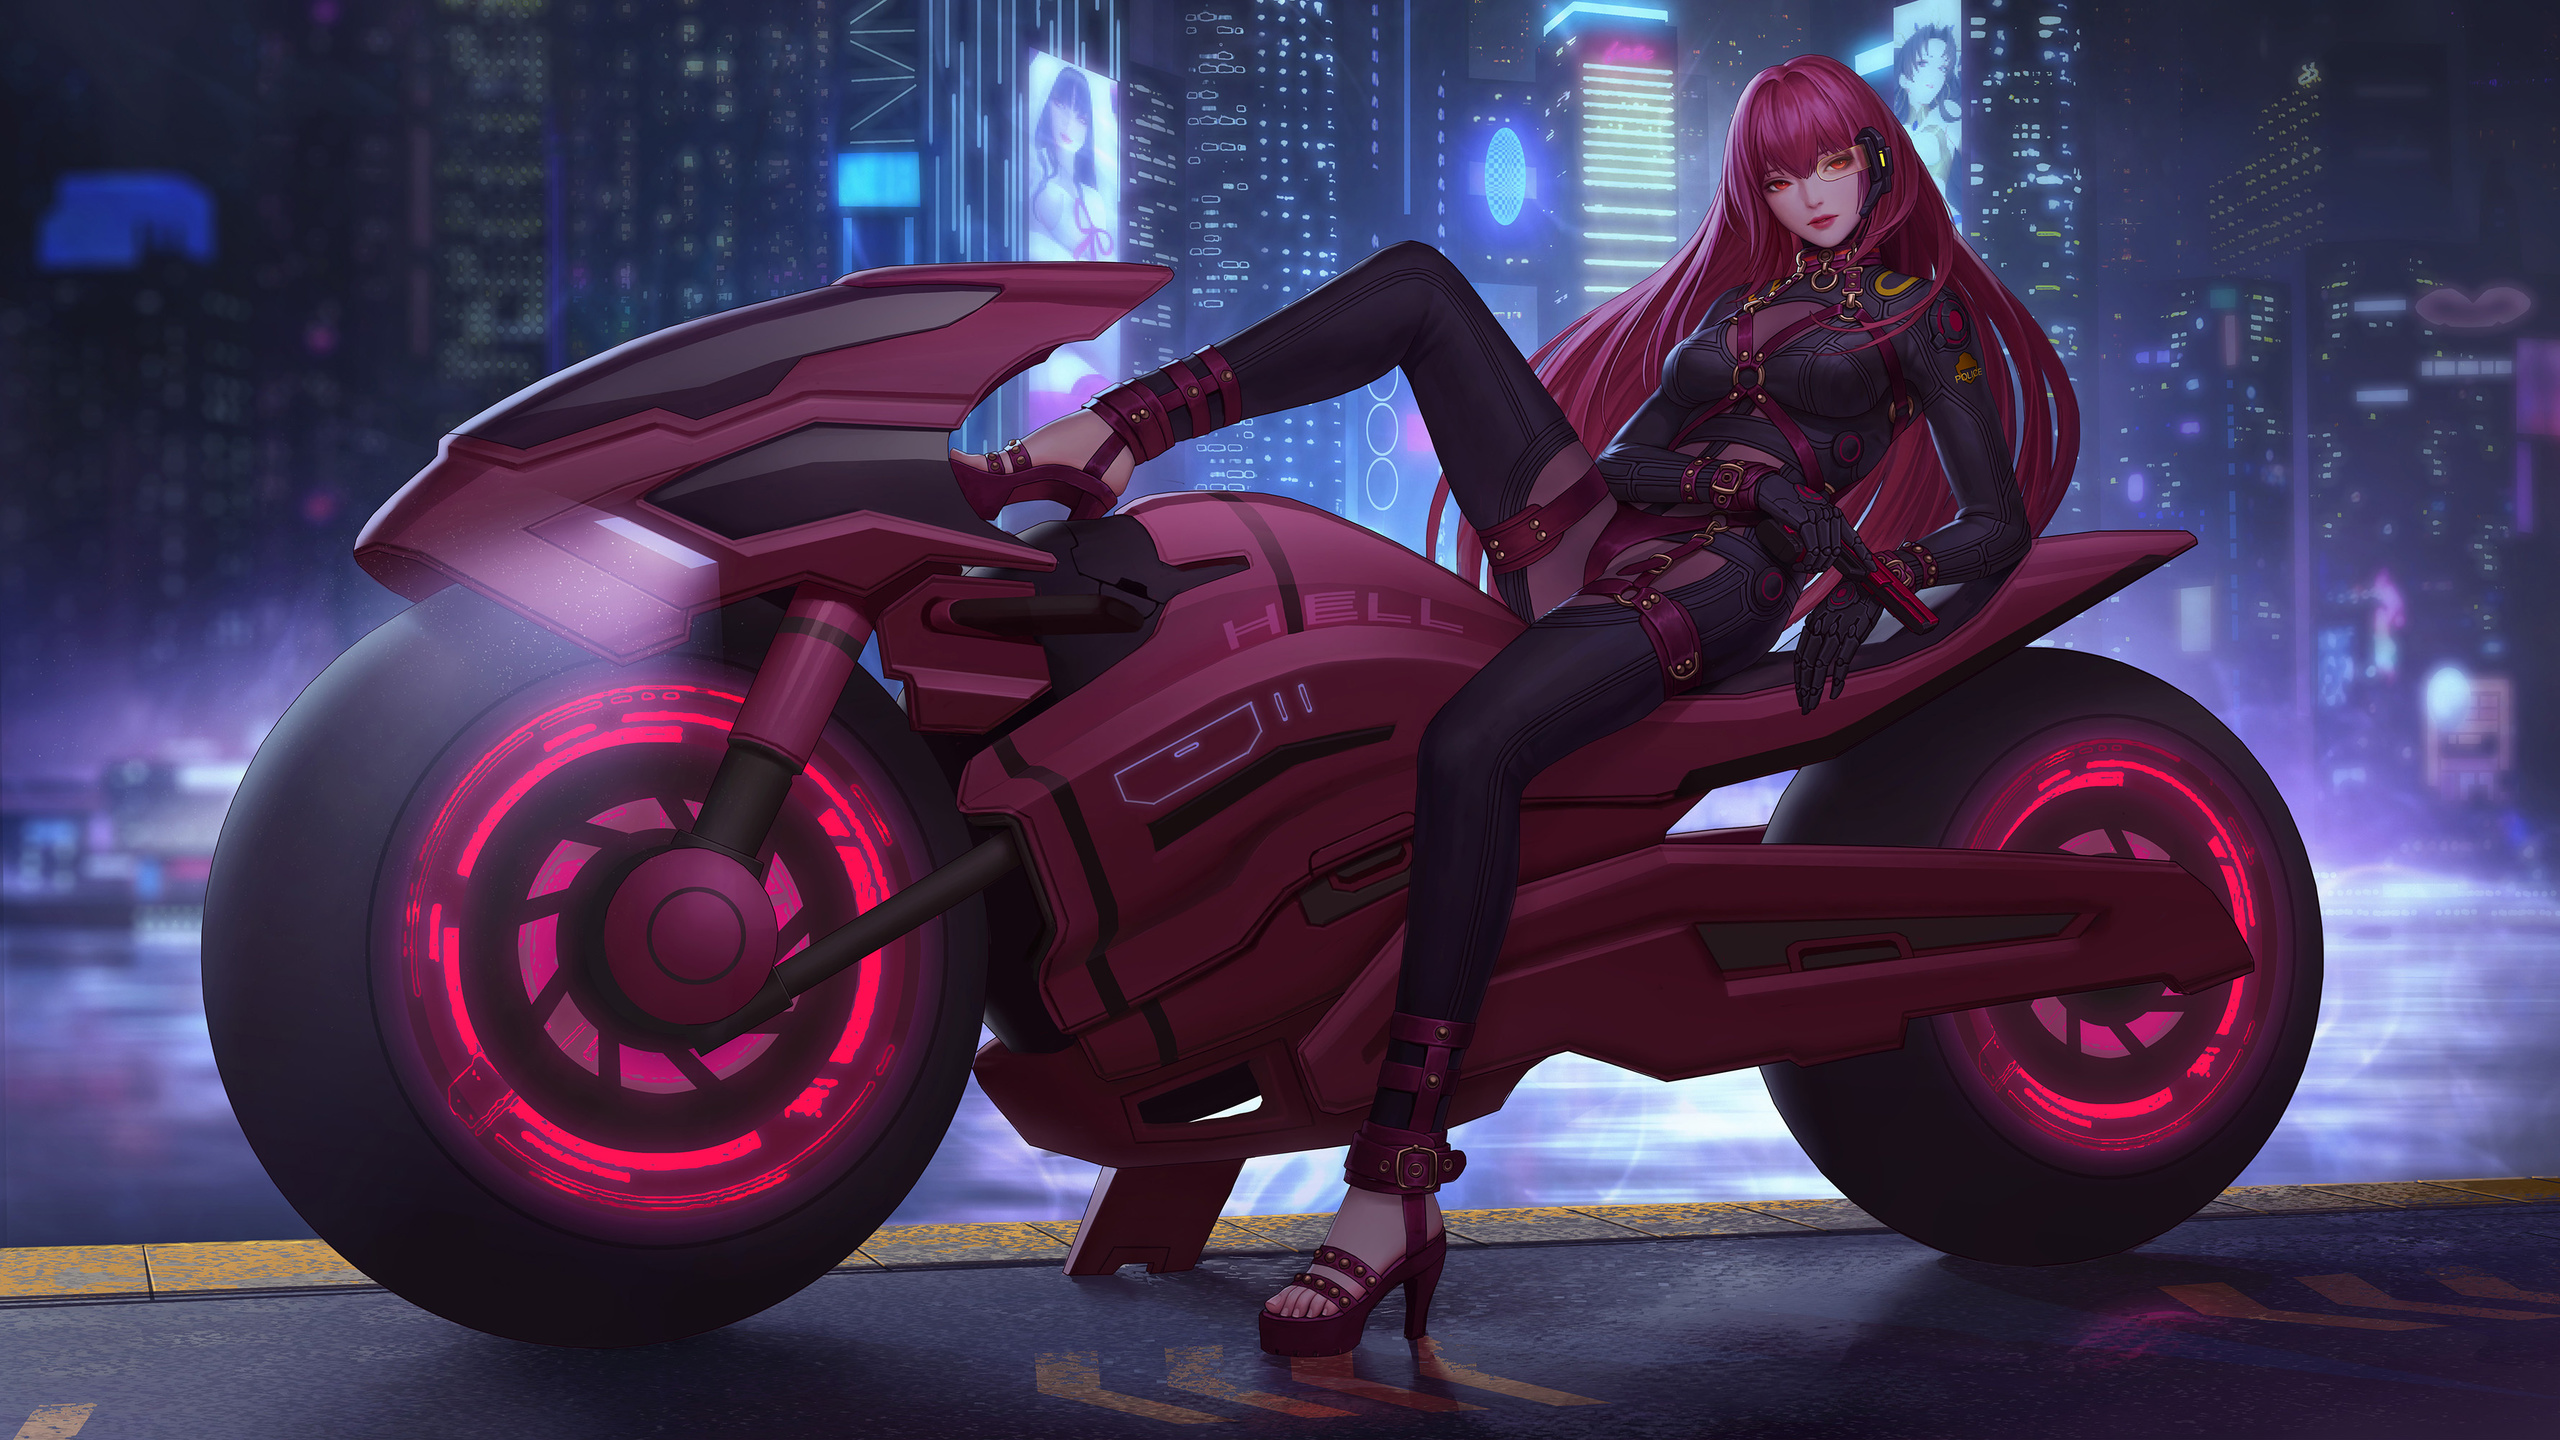 city cyberpunk 2077, fate grand order, gun, motorcycle night, fate grand order, techgirl weapon, anime girl